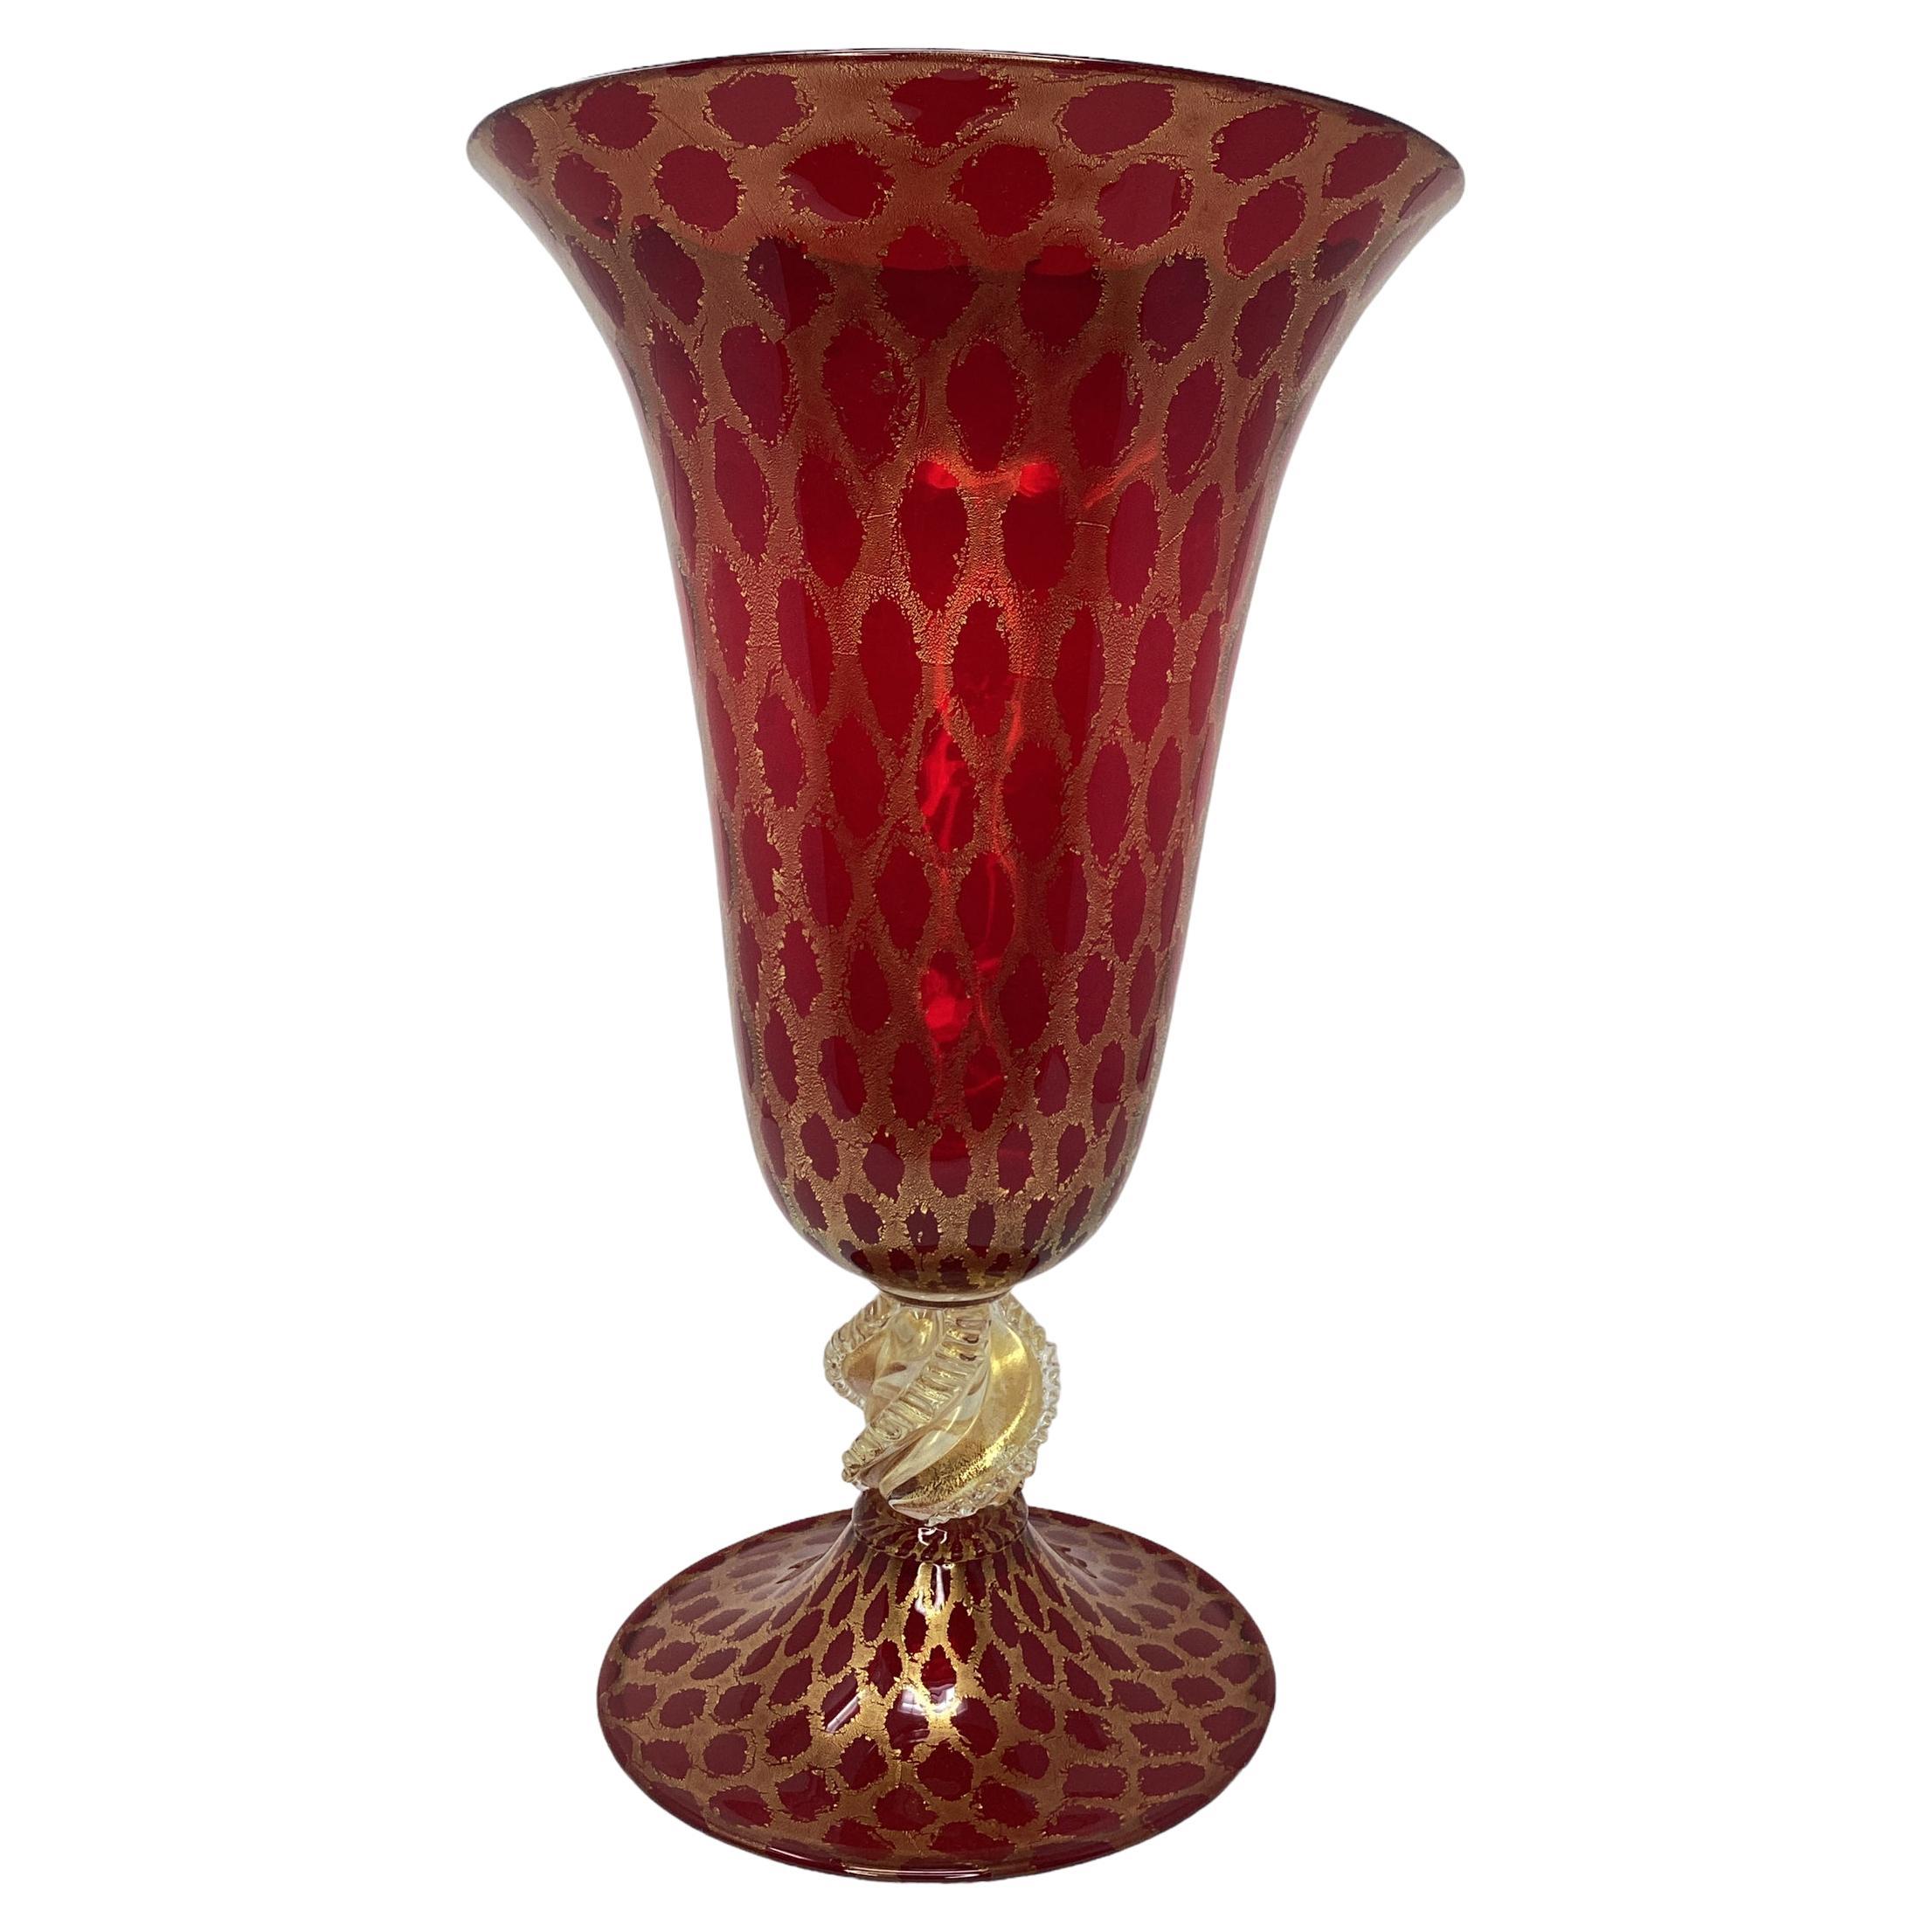 Large Vintage Trumpet Murano Glass Vase